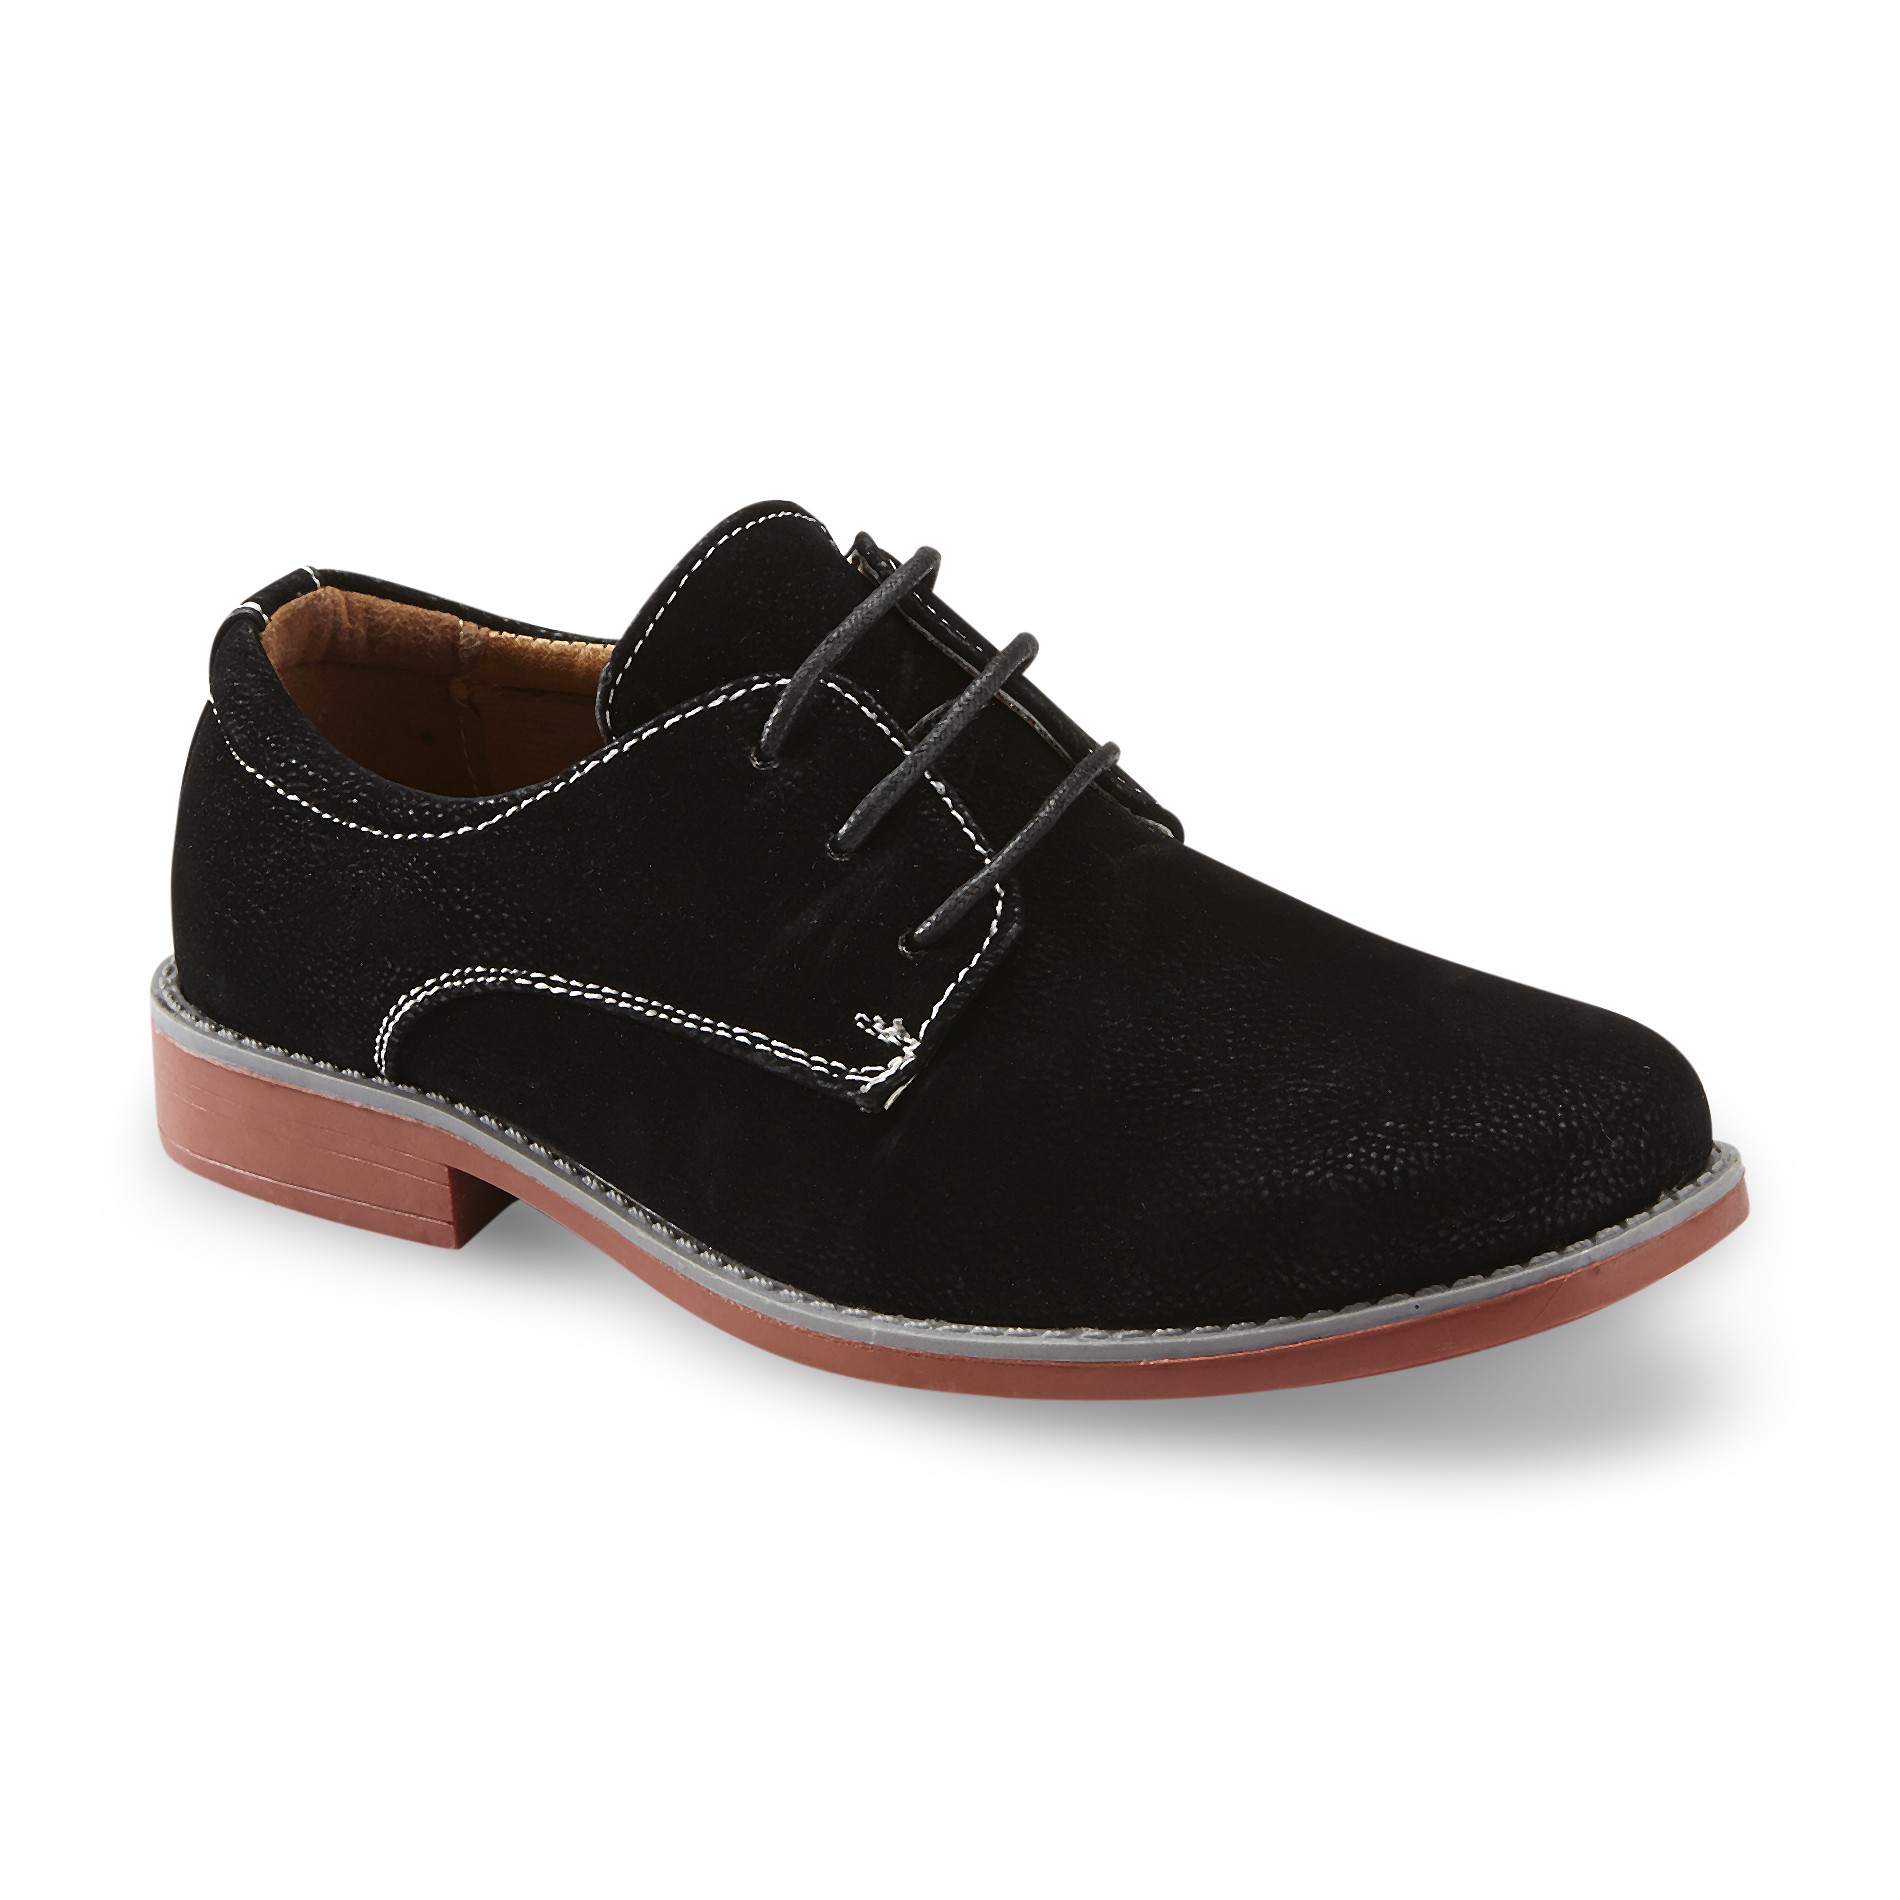 Joseph Allen Boy's Rye Black/Red Oxford Casual Shoe